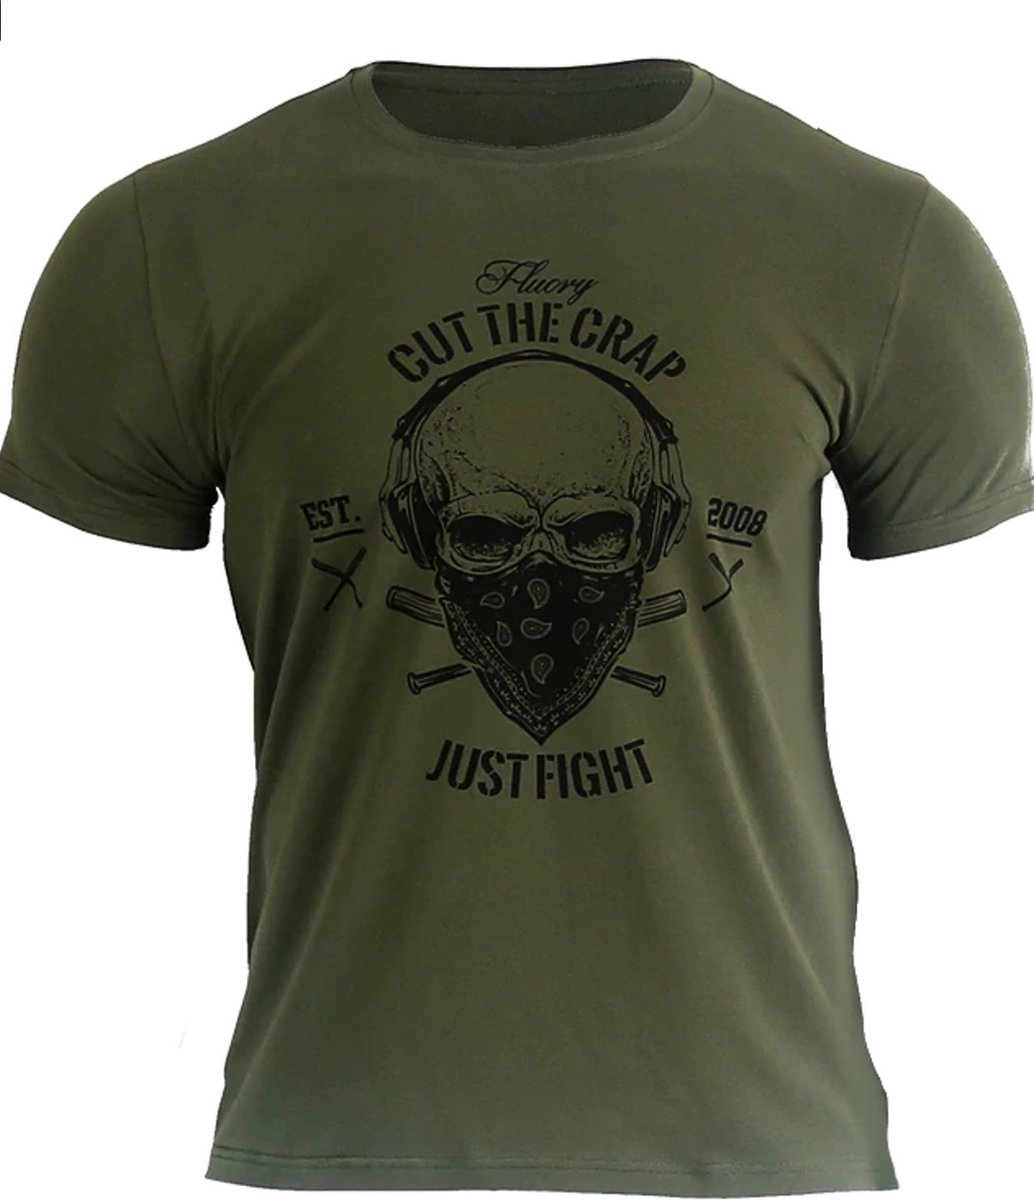 Fluory Cut the Crap Just Fight T-shirt Military Green maat XXXL